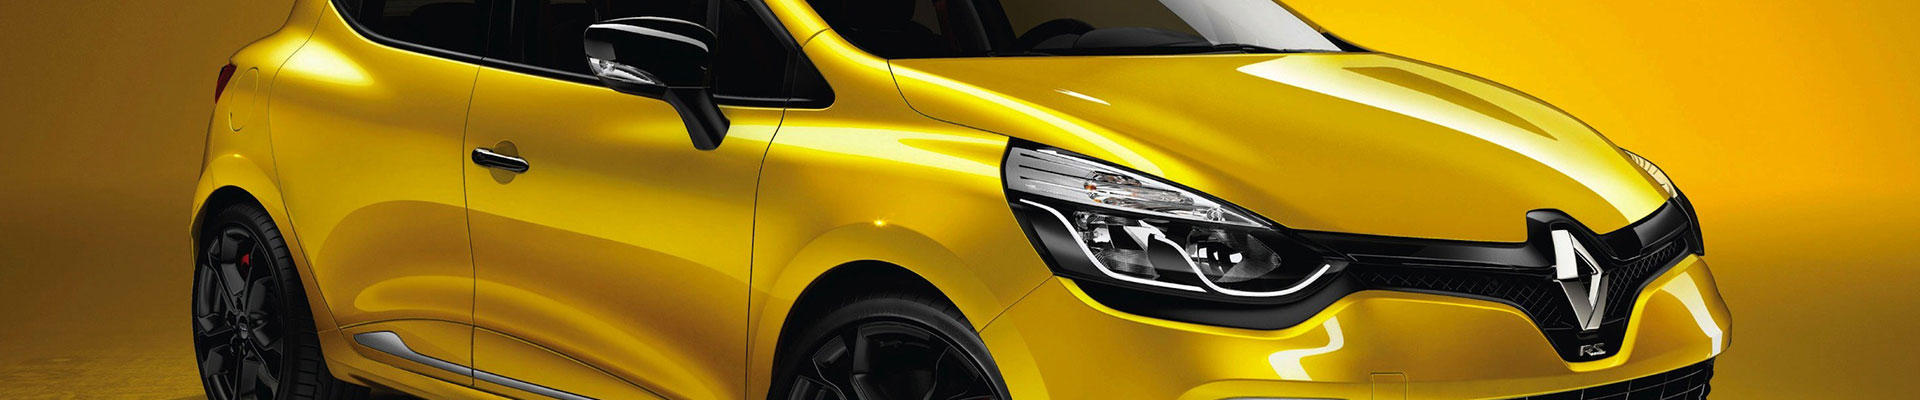 Renault Clio autoverzekering